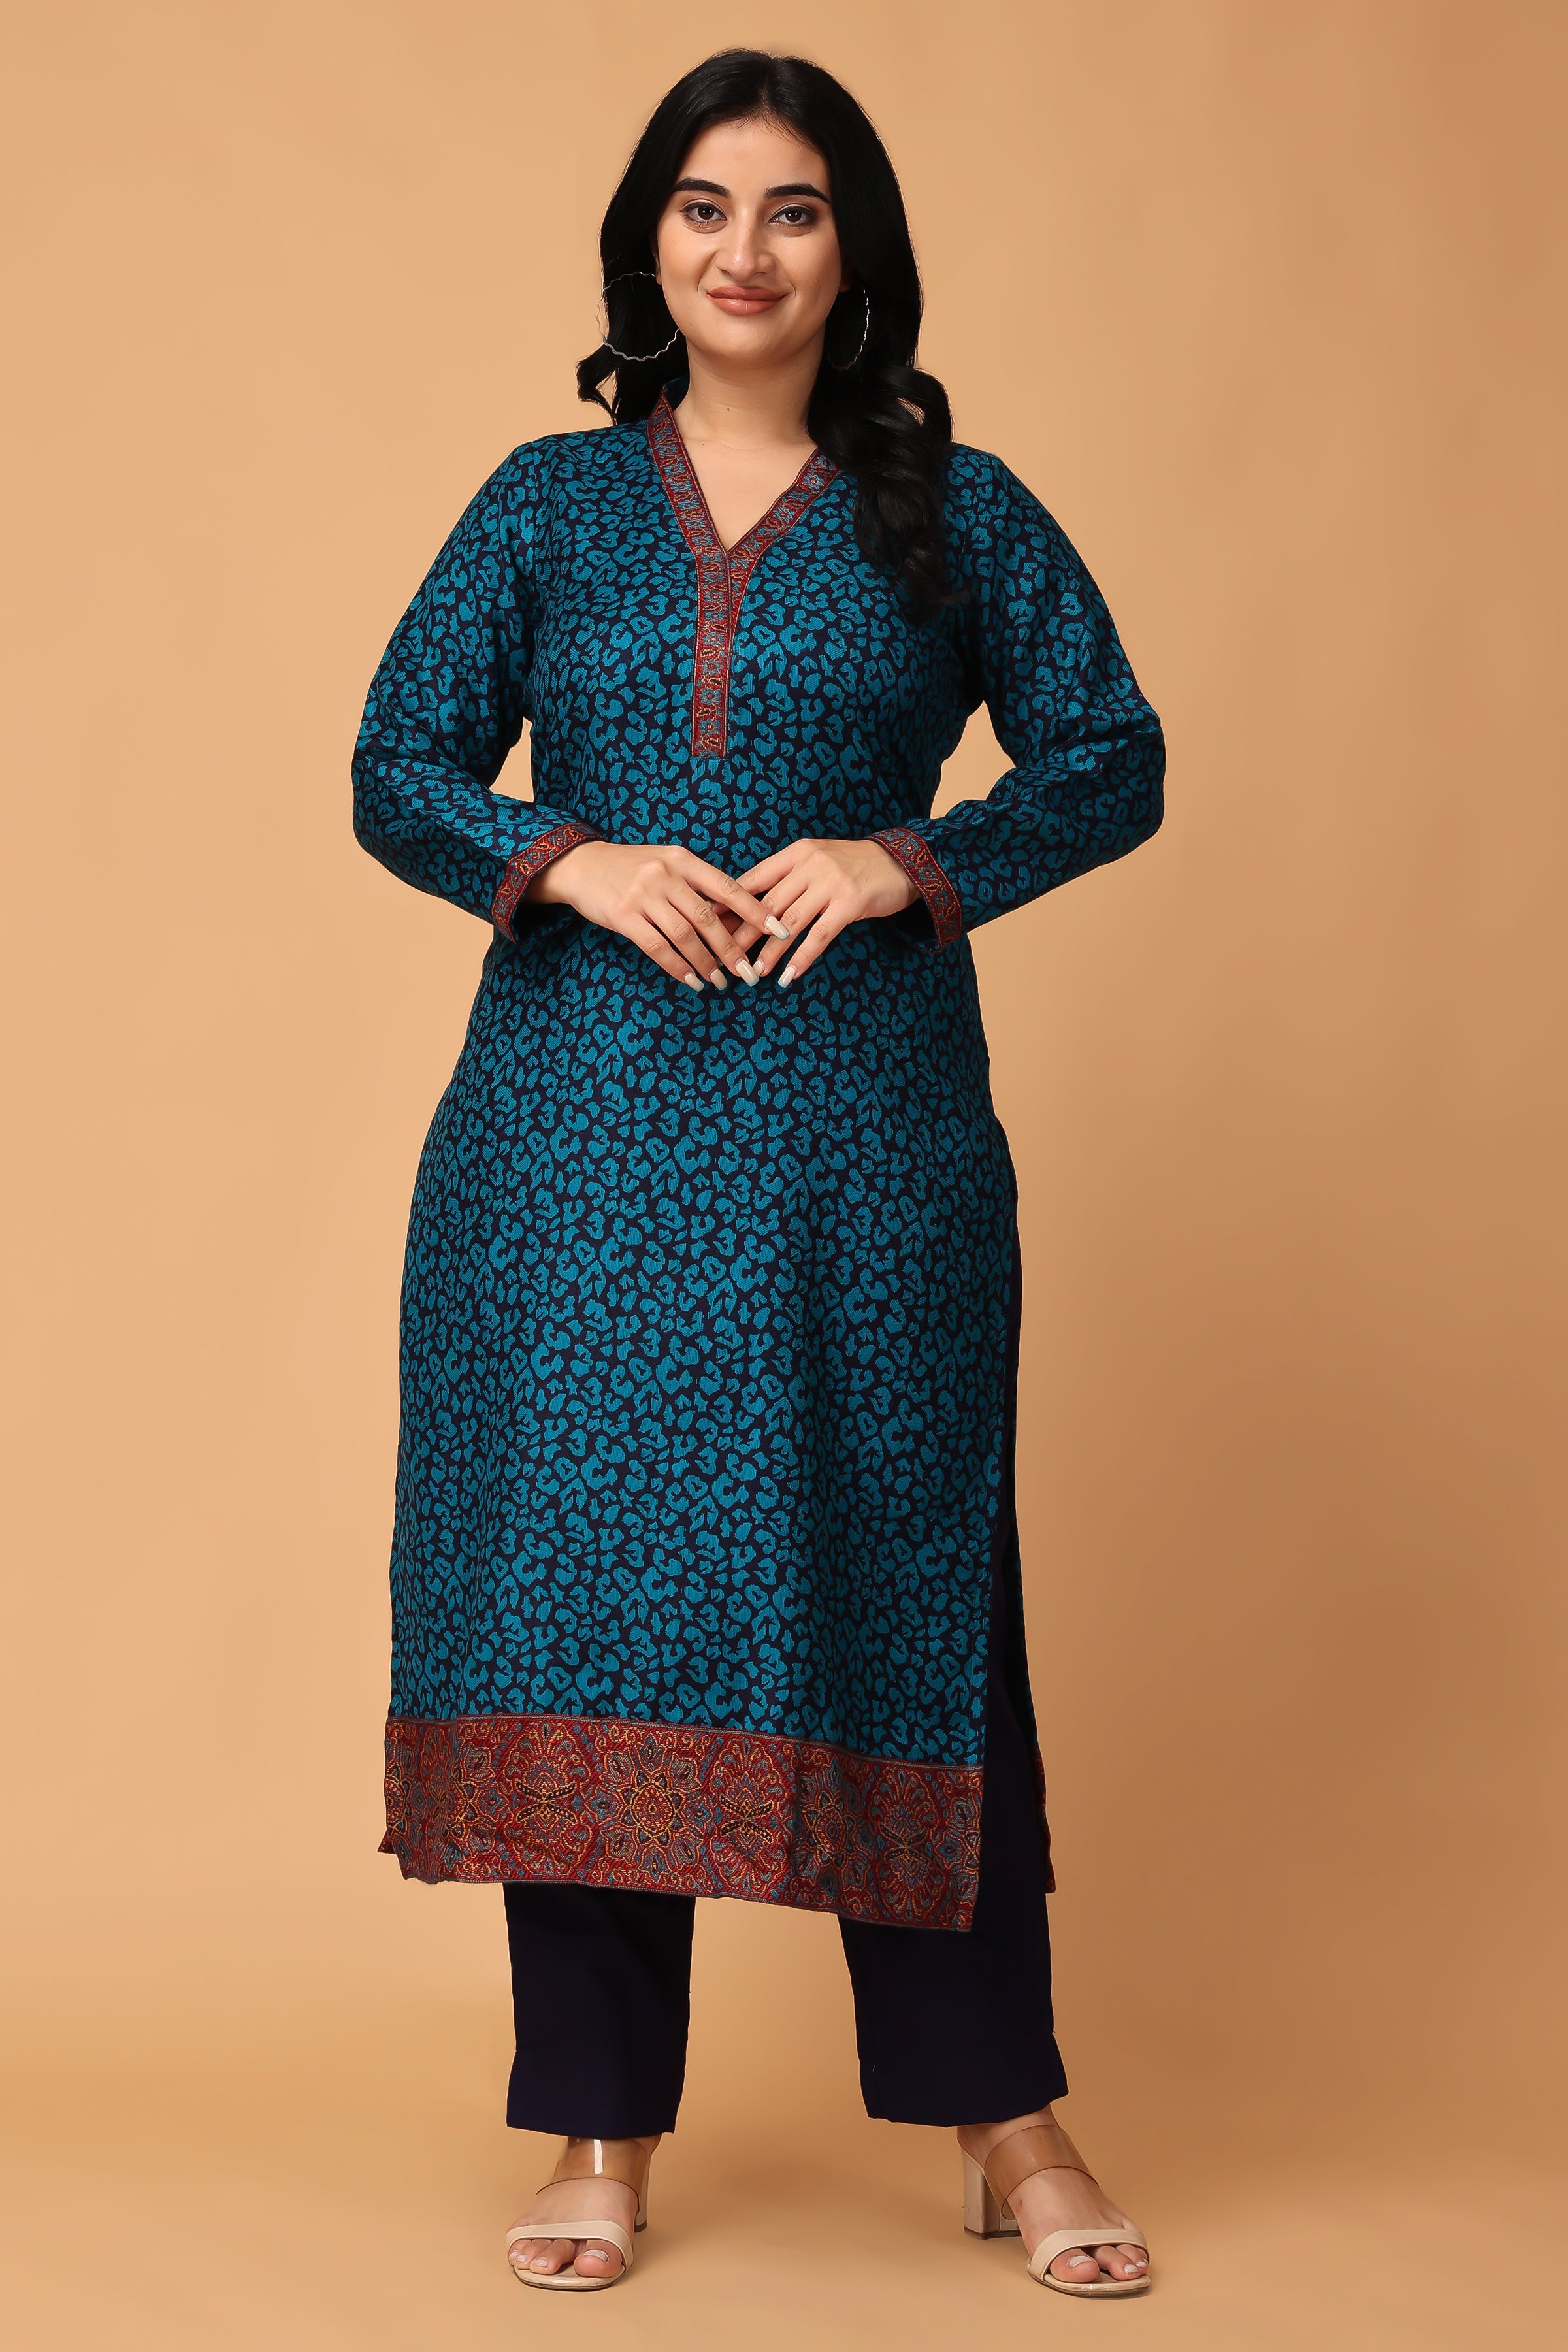 Latest 35 Types of Woolen Kurti Designs for Women - Tips and Beauty | Kurti  designs, Winter woolen kurtis for women, Woolen tops